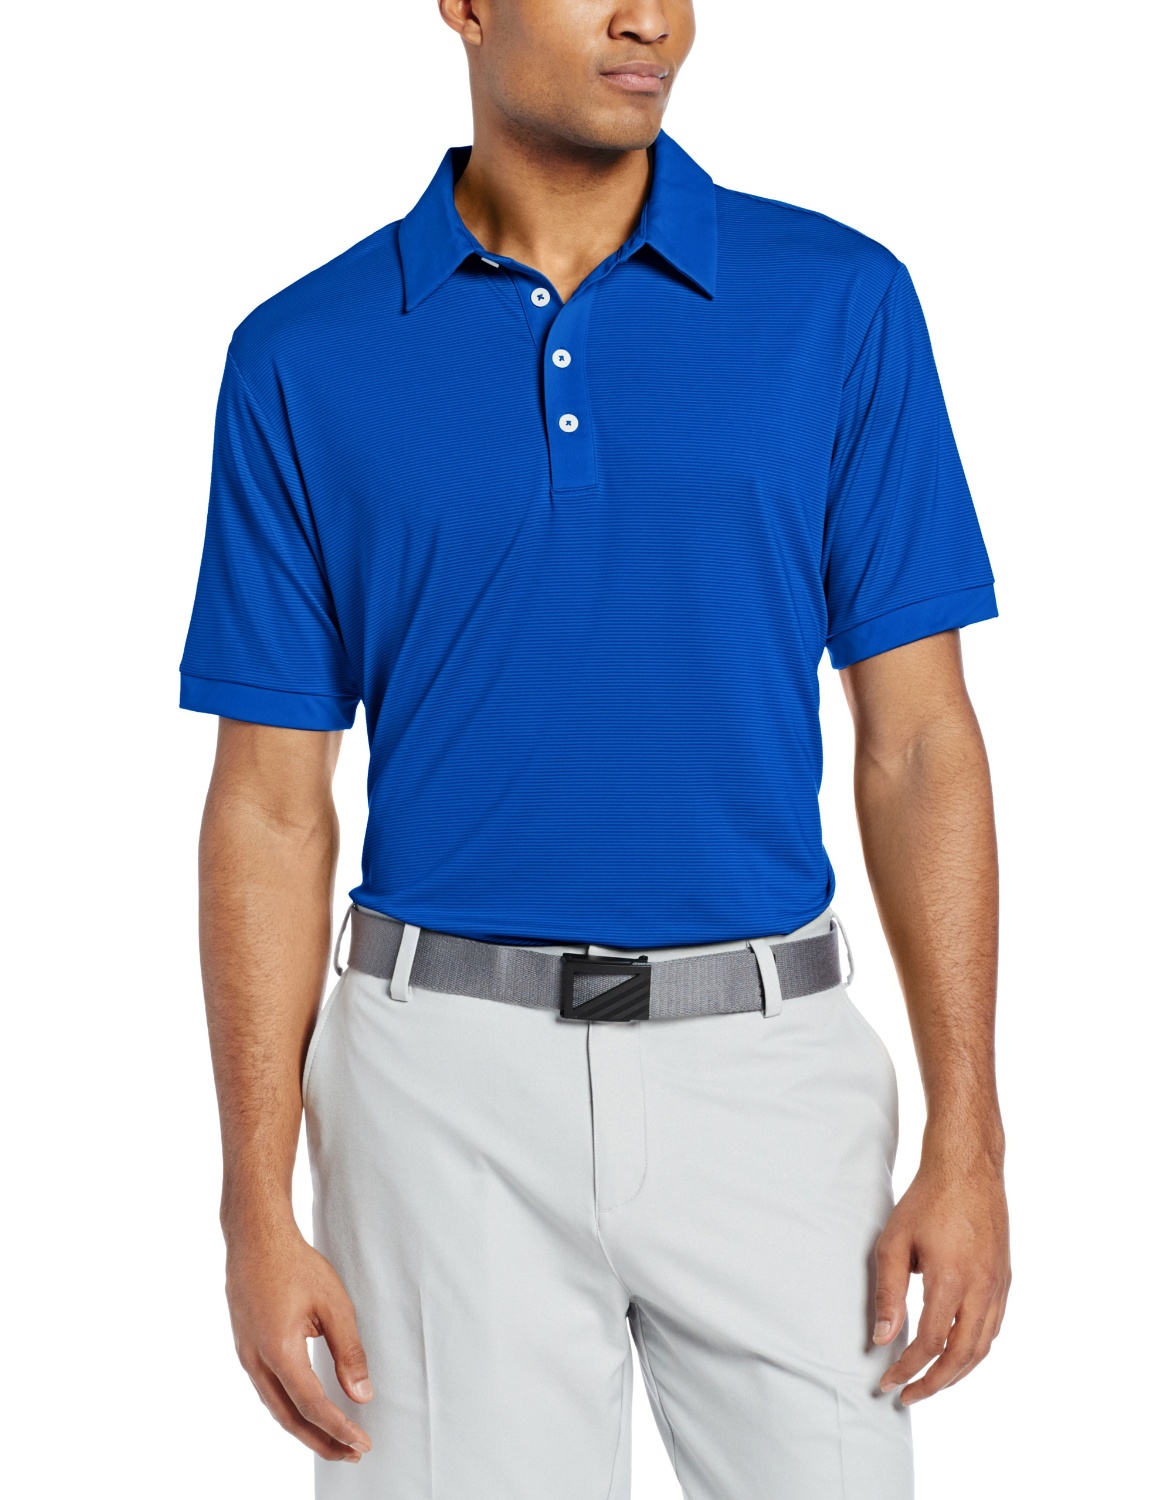 Adidas Climalite Microstripe Golf Polo Shirts